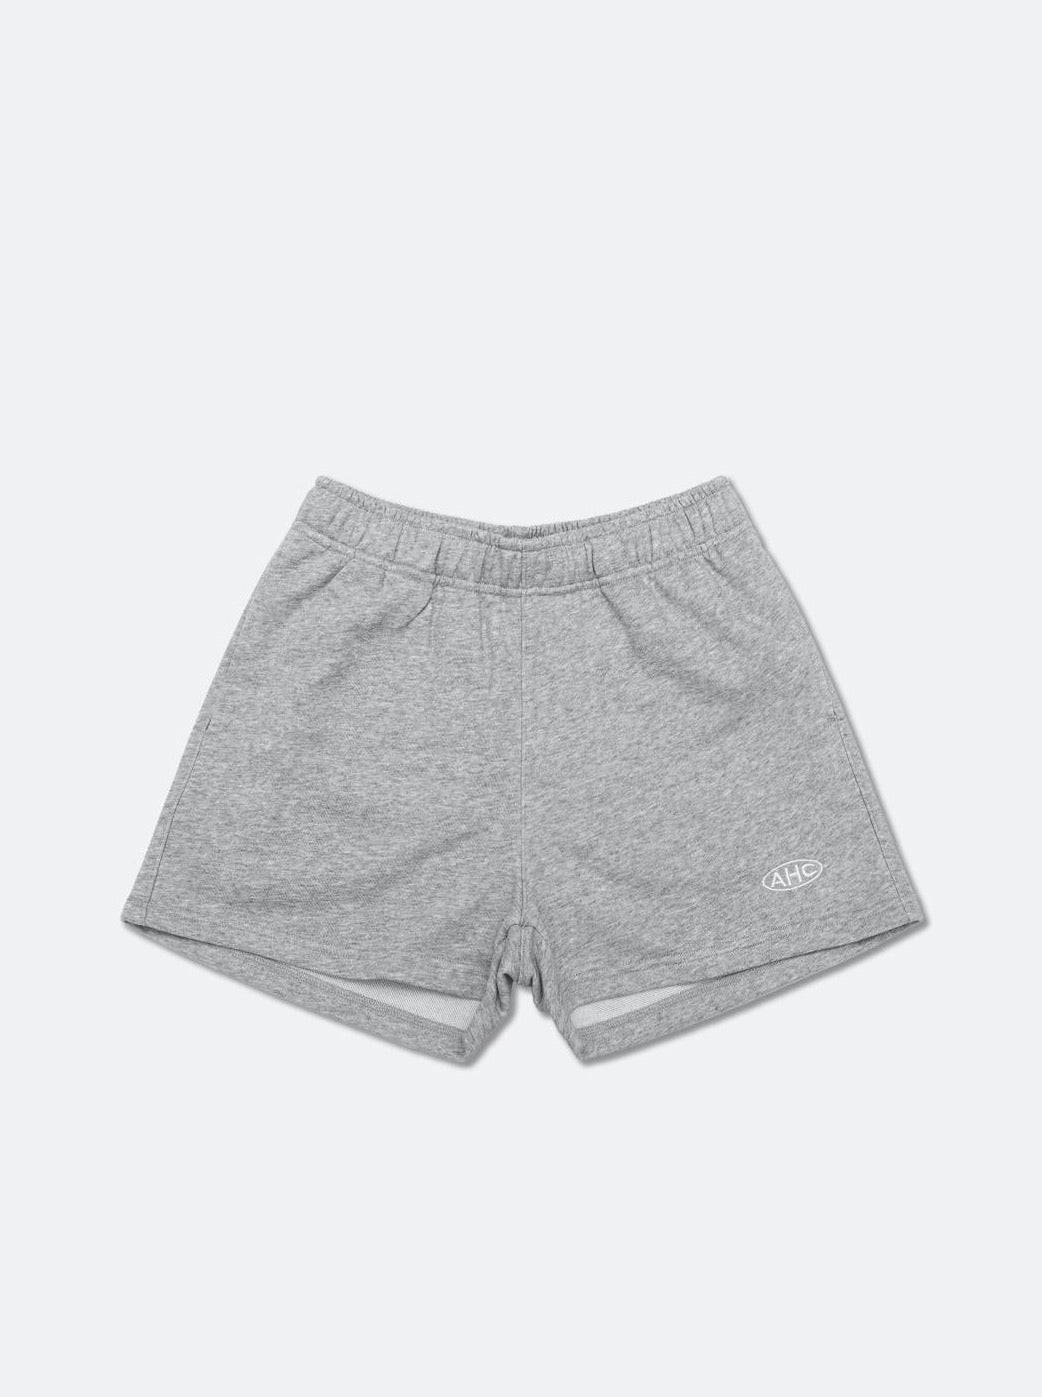 ahc sweat shorts